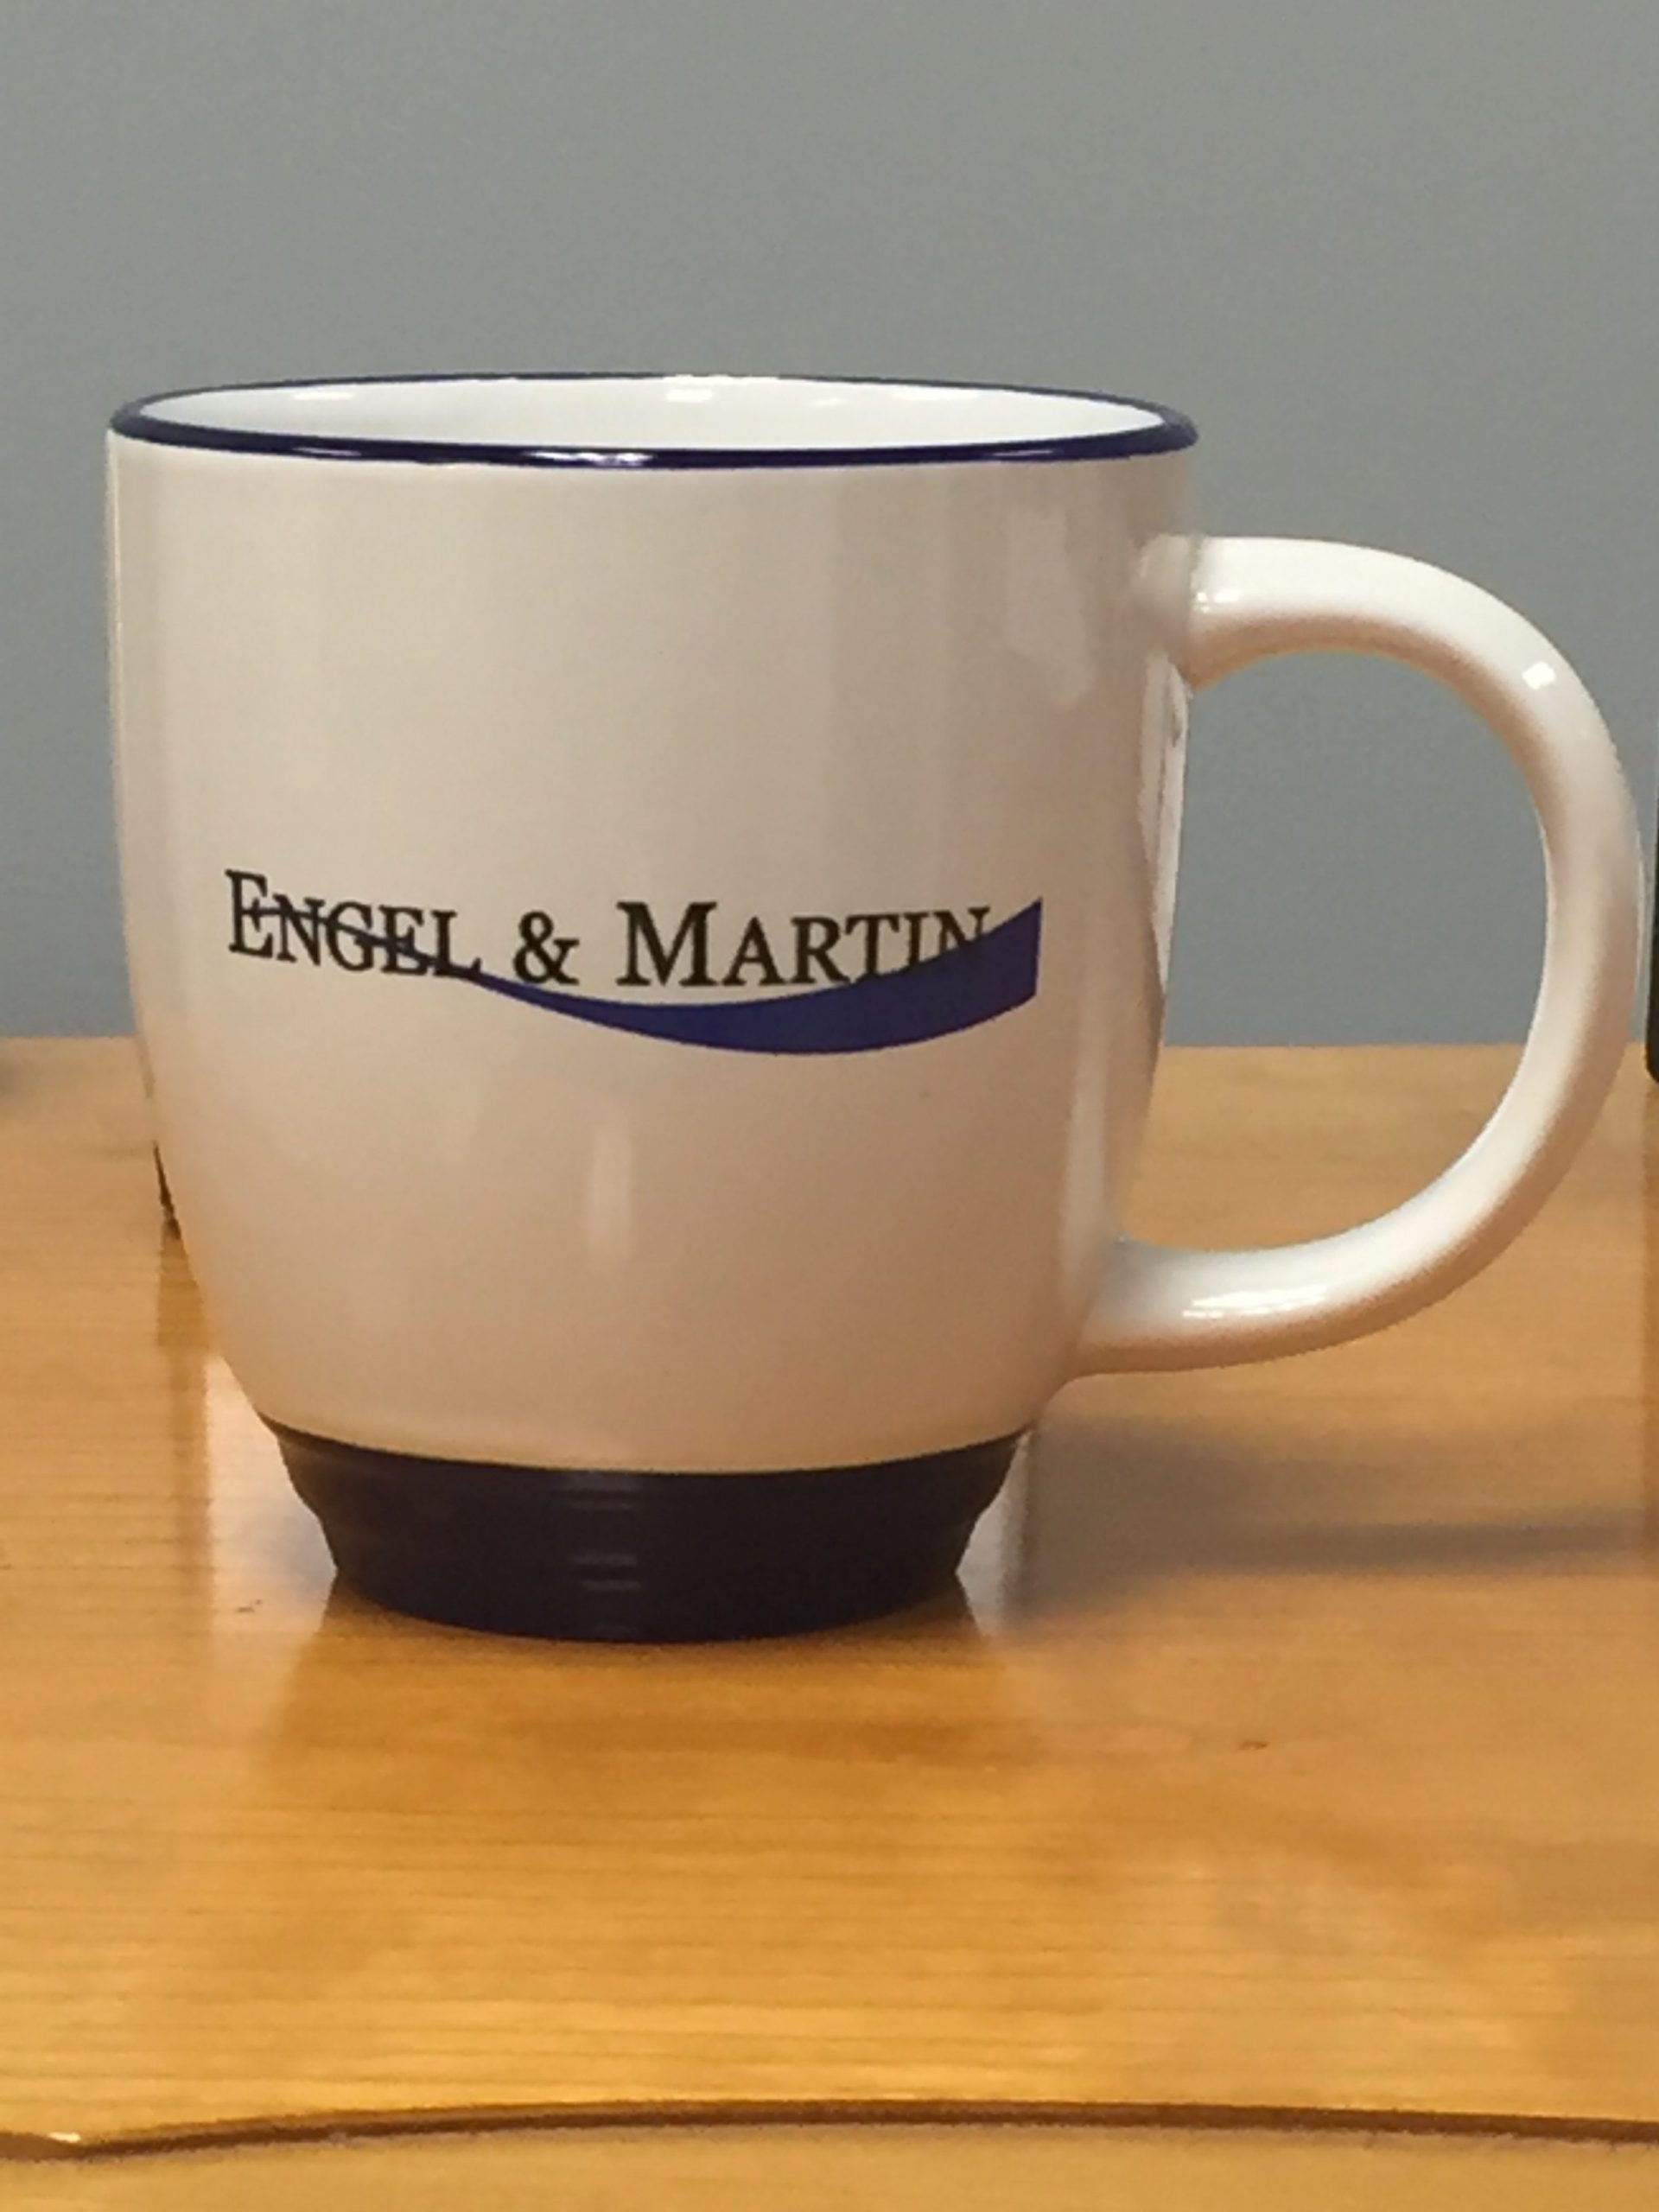 Engel & Martin coffee mugs